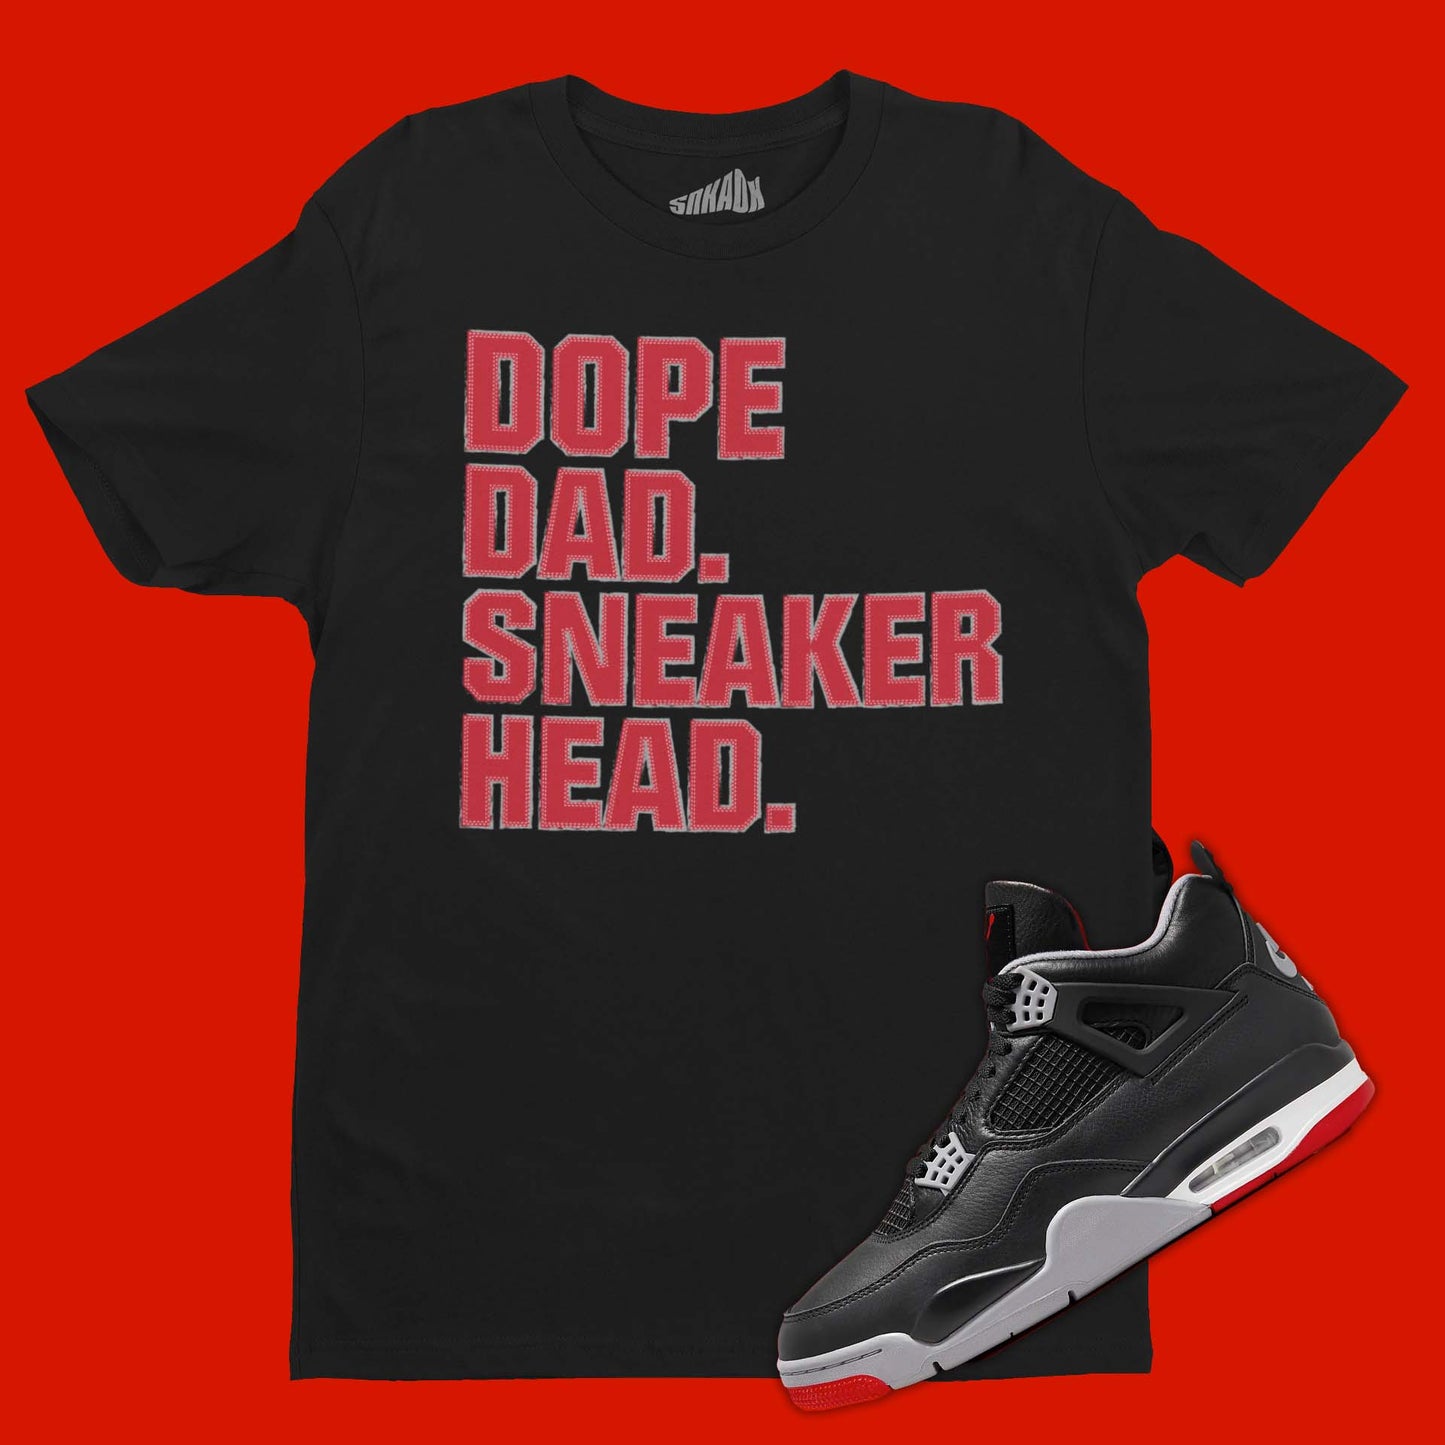 Dope Dad Sneakerhead T-Shirt Matching Air Jordan 4 Bred Reimagined